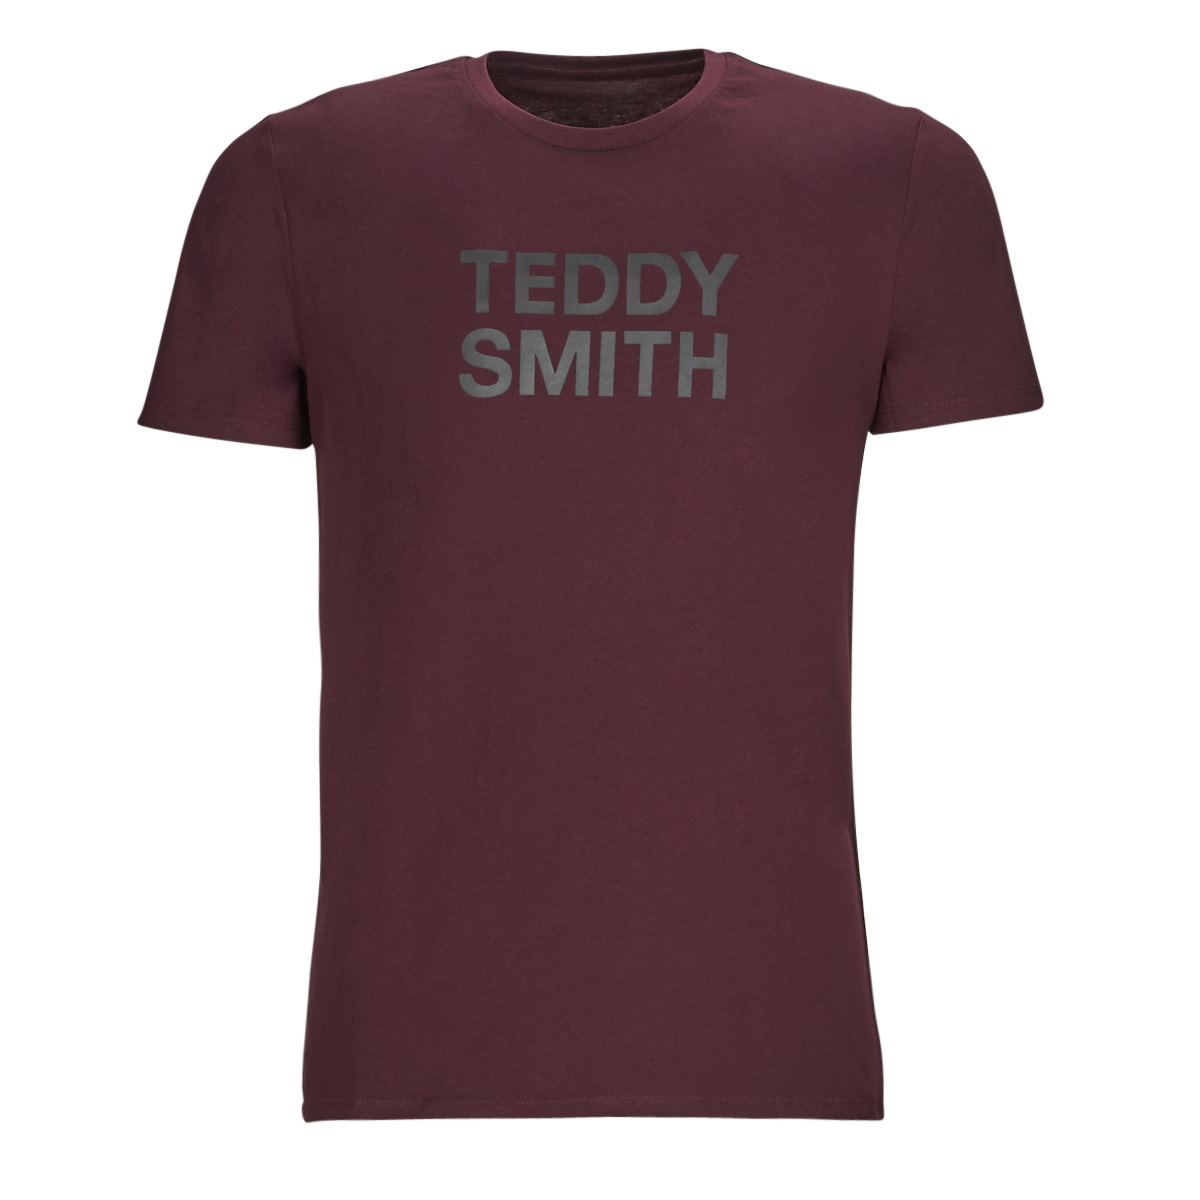 Teddy Smith Bordeaux TICLASS WePNwLBL